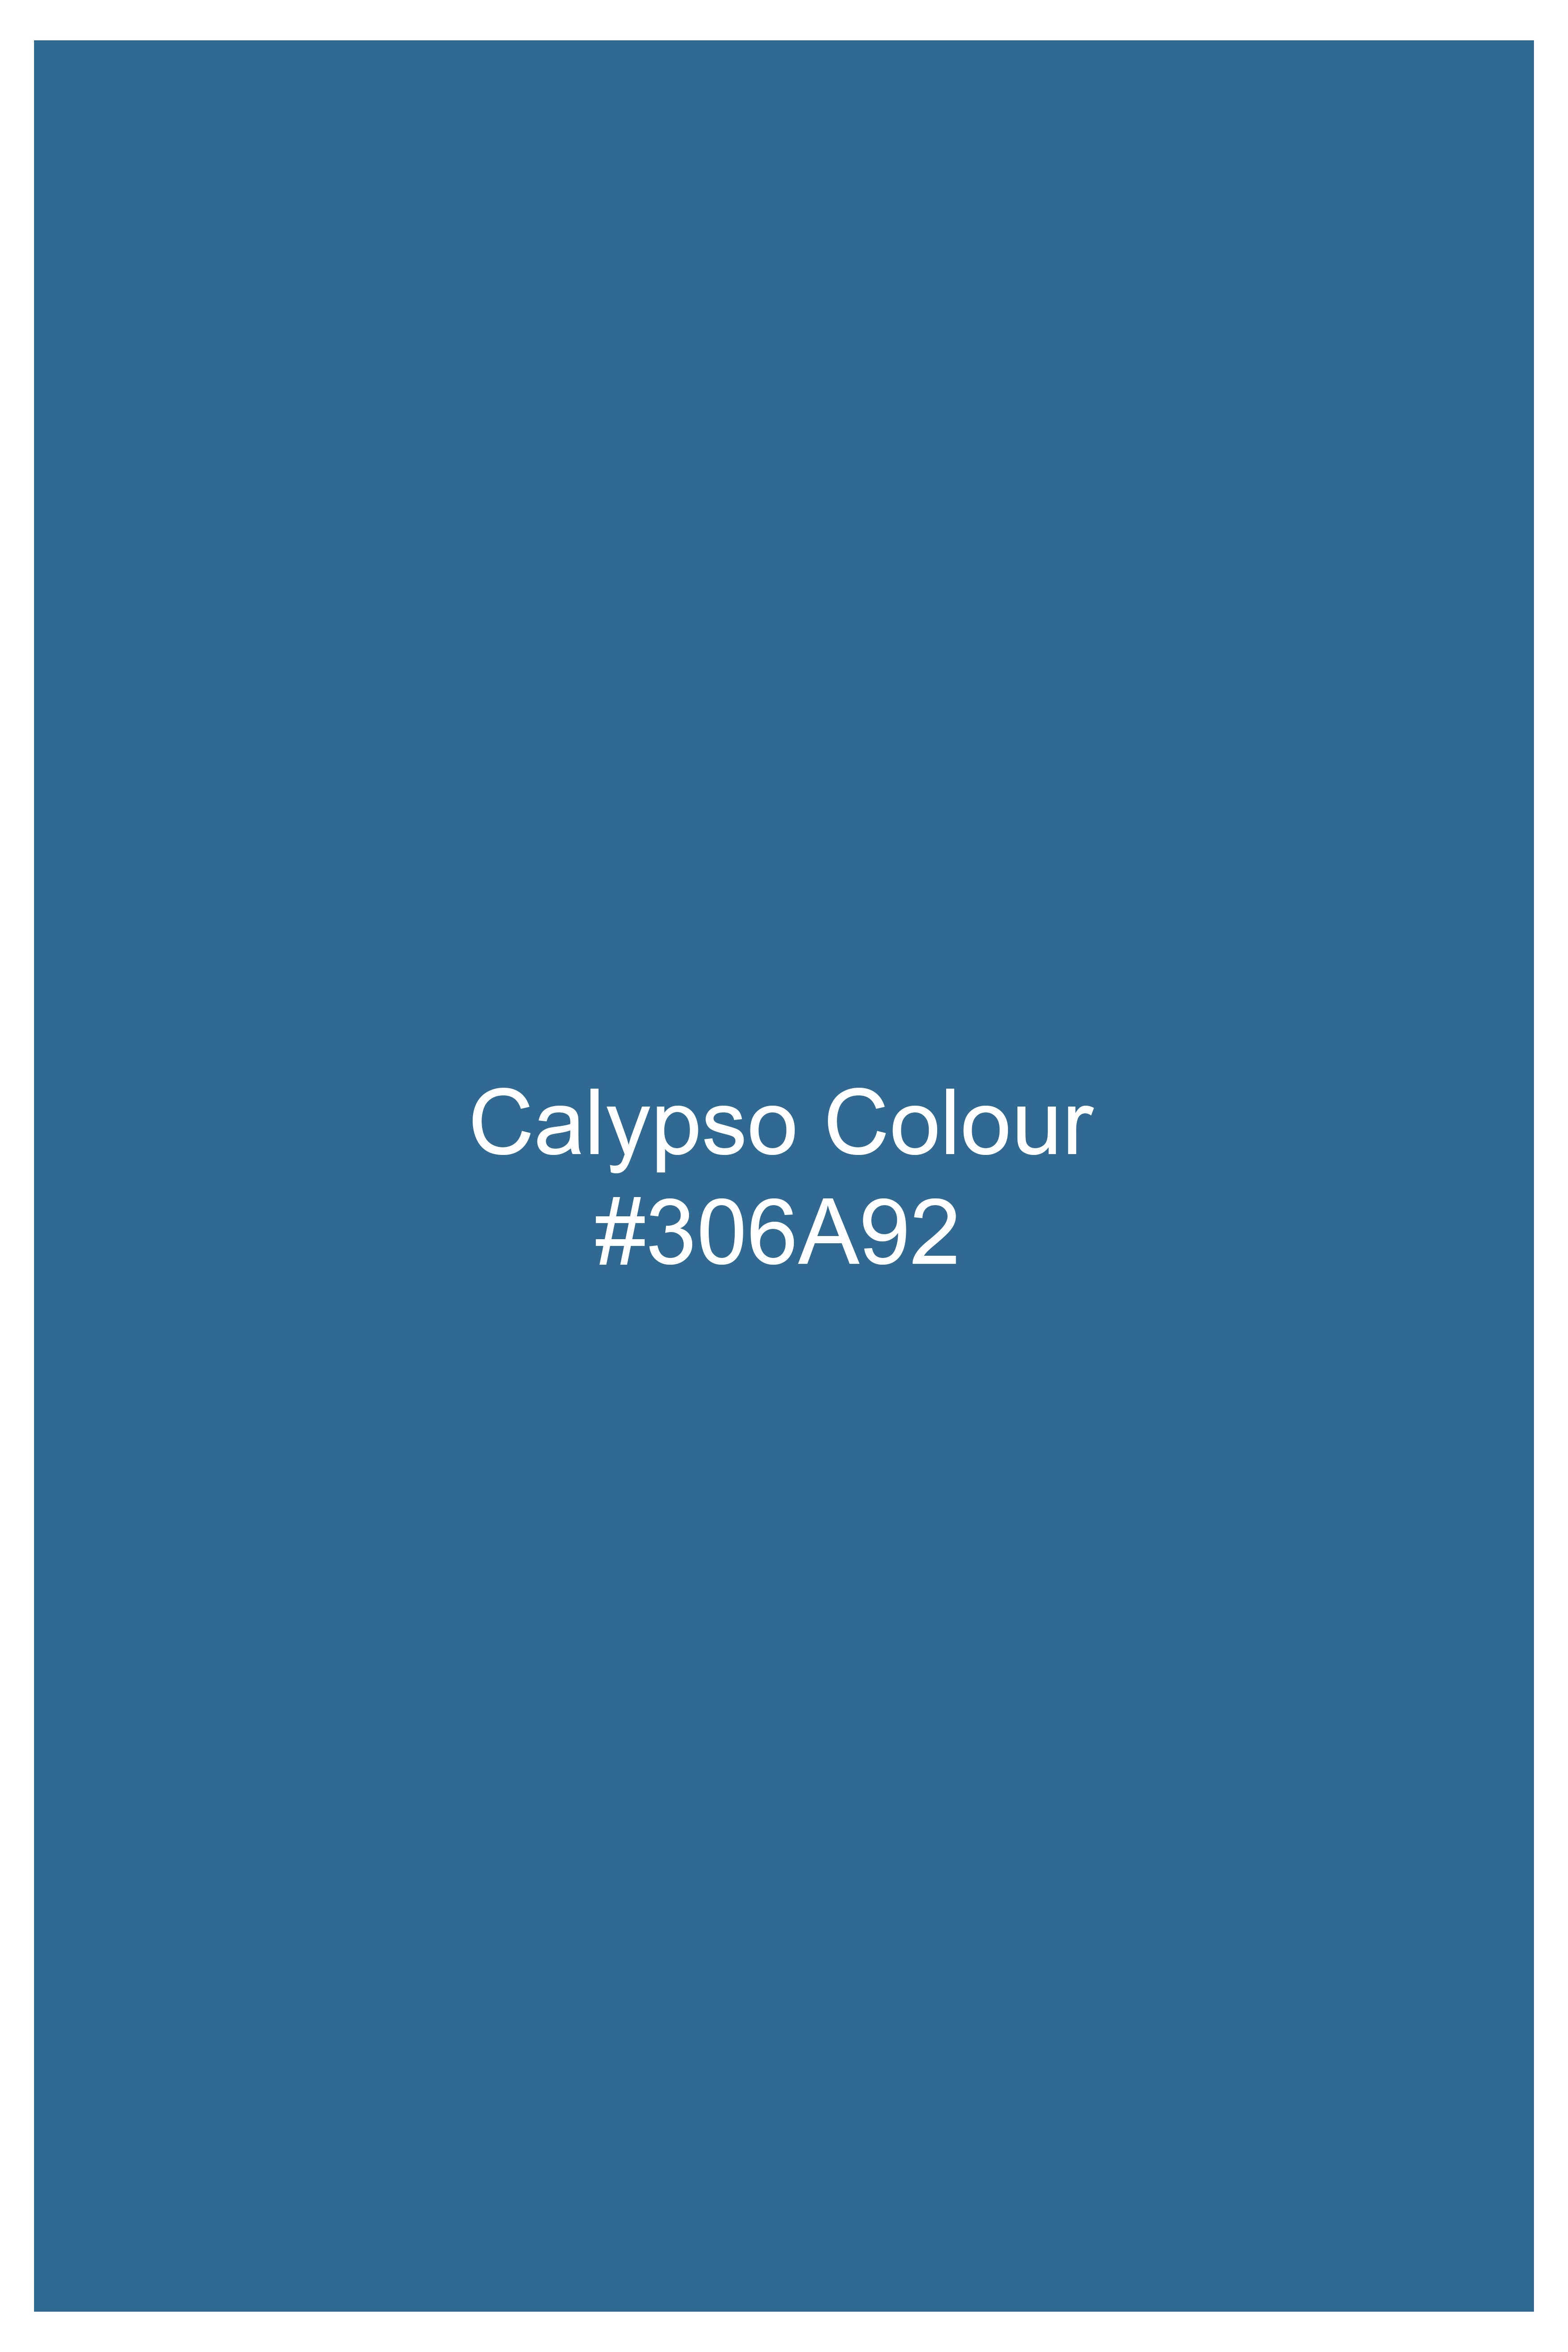 Calypso Blue Wool Rich Tuxedo Blazer BL3064-BKL-36, BL3064-BKL-38, BL3064-BKL-40, BL3064-BKL-42, BL3064-BKL-44, BL3064-BKL-46, BL3064-BKL-48, BL3064-BKL-50, BL3064-BKL-52, BL3064-BKL-54, BL3064-BKL-56, BL3064-BKL-58, BL3064-BKL-60